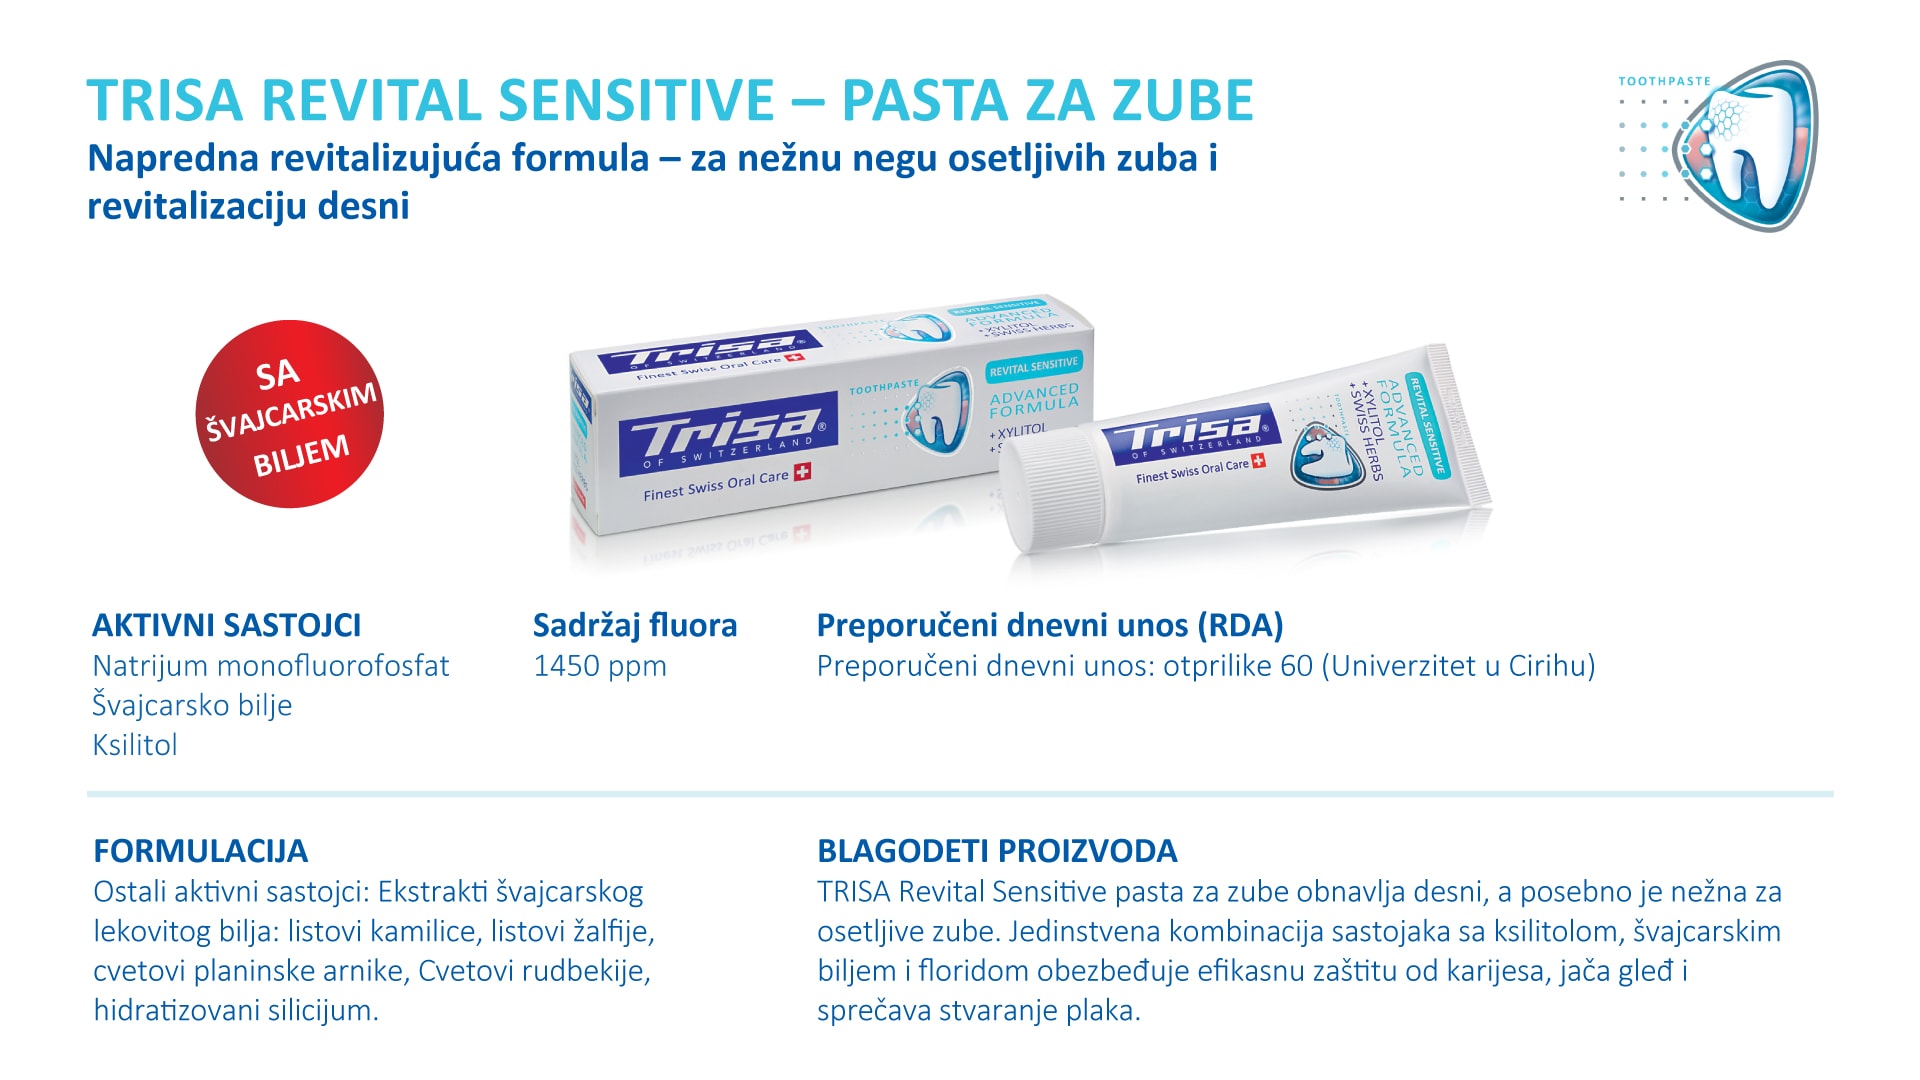 Pasta za zube TRISA Revital Sensitive Toothpaste Banner1